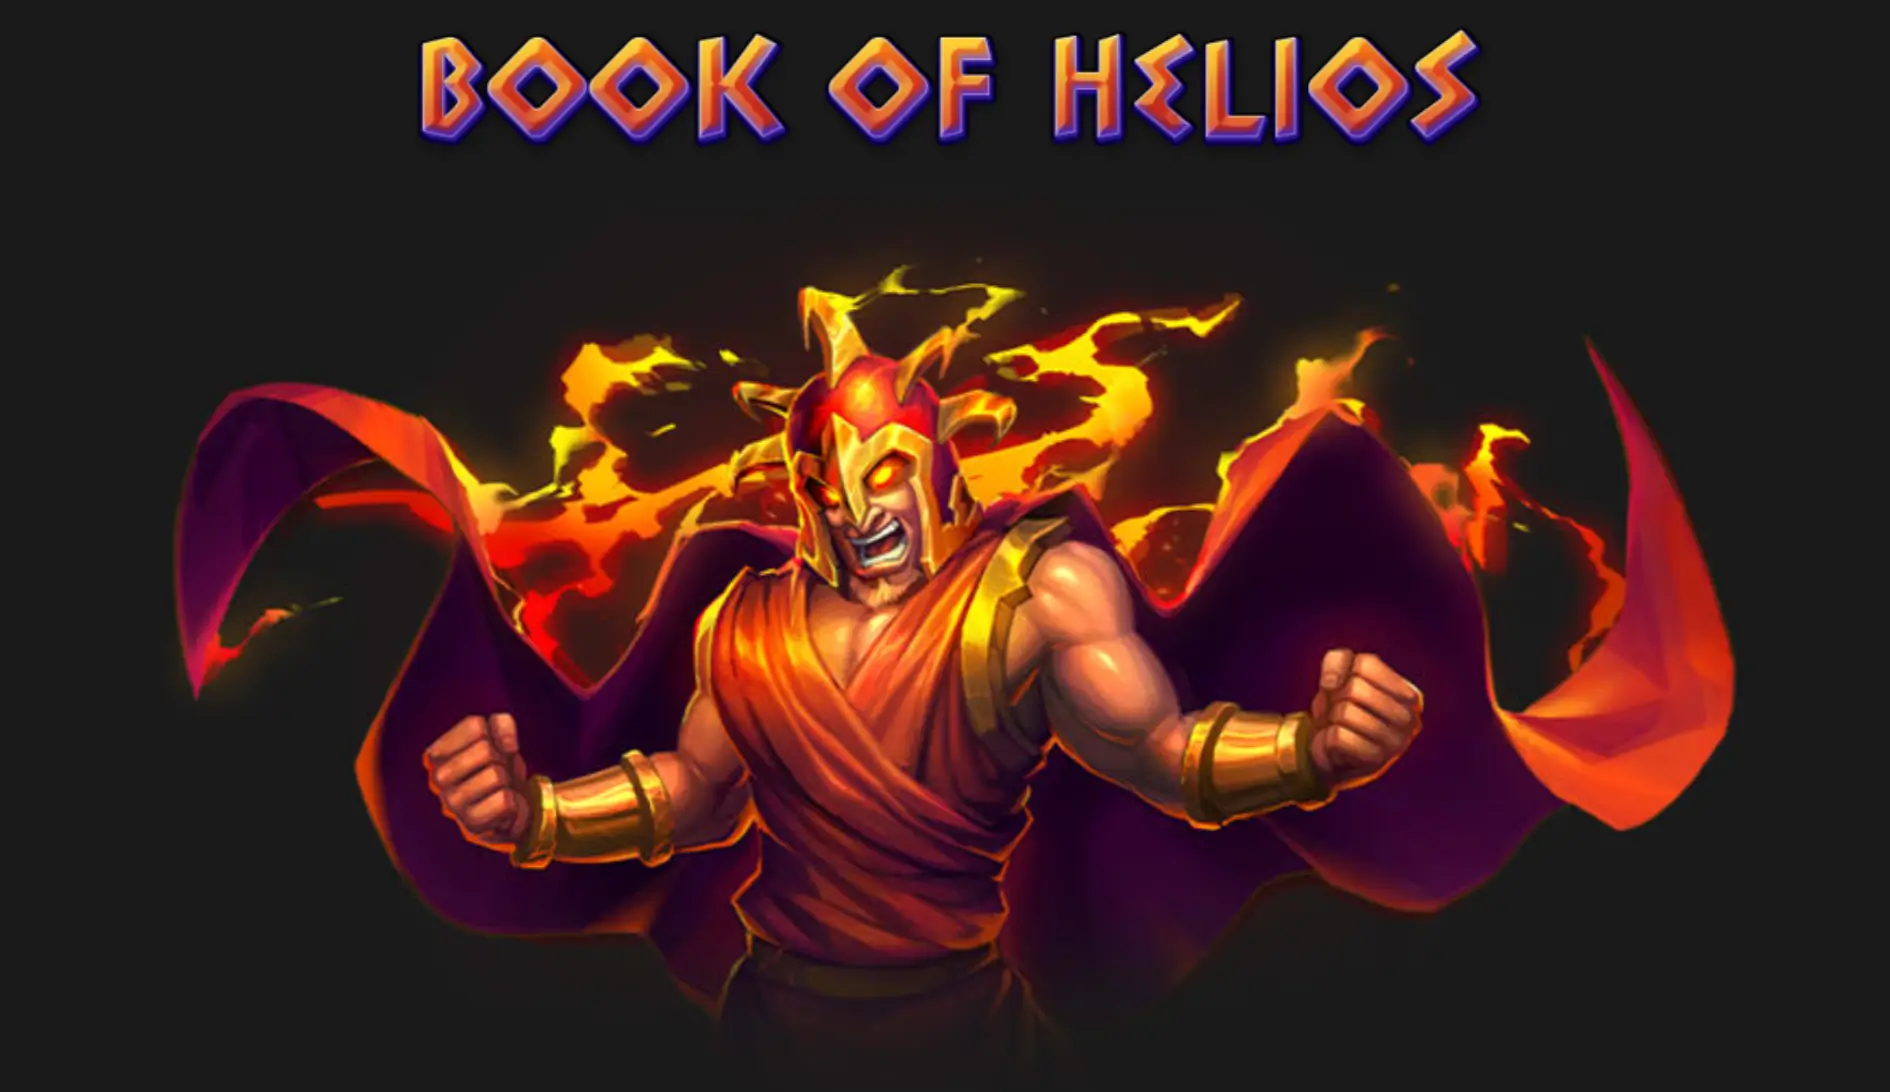 Book of helios